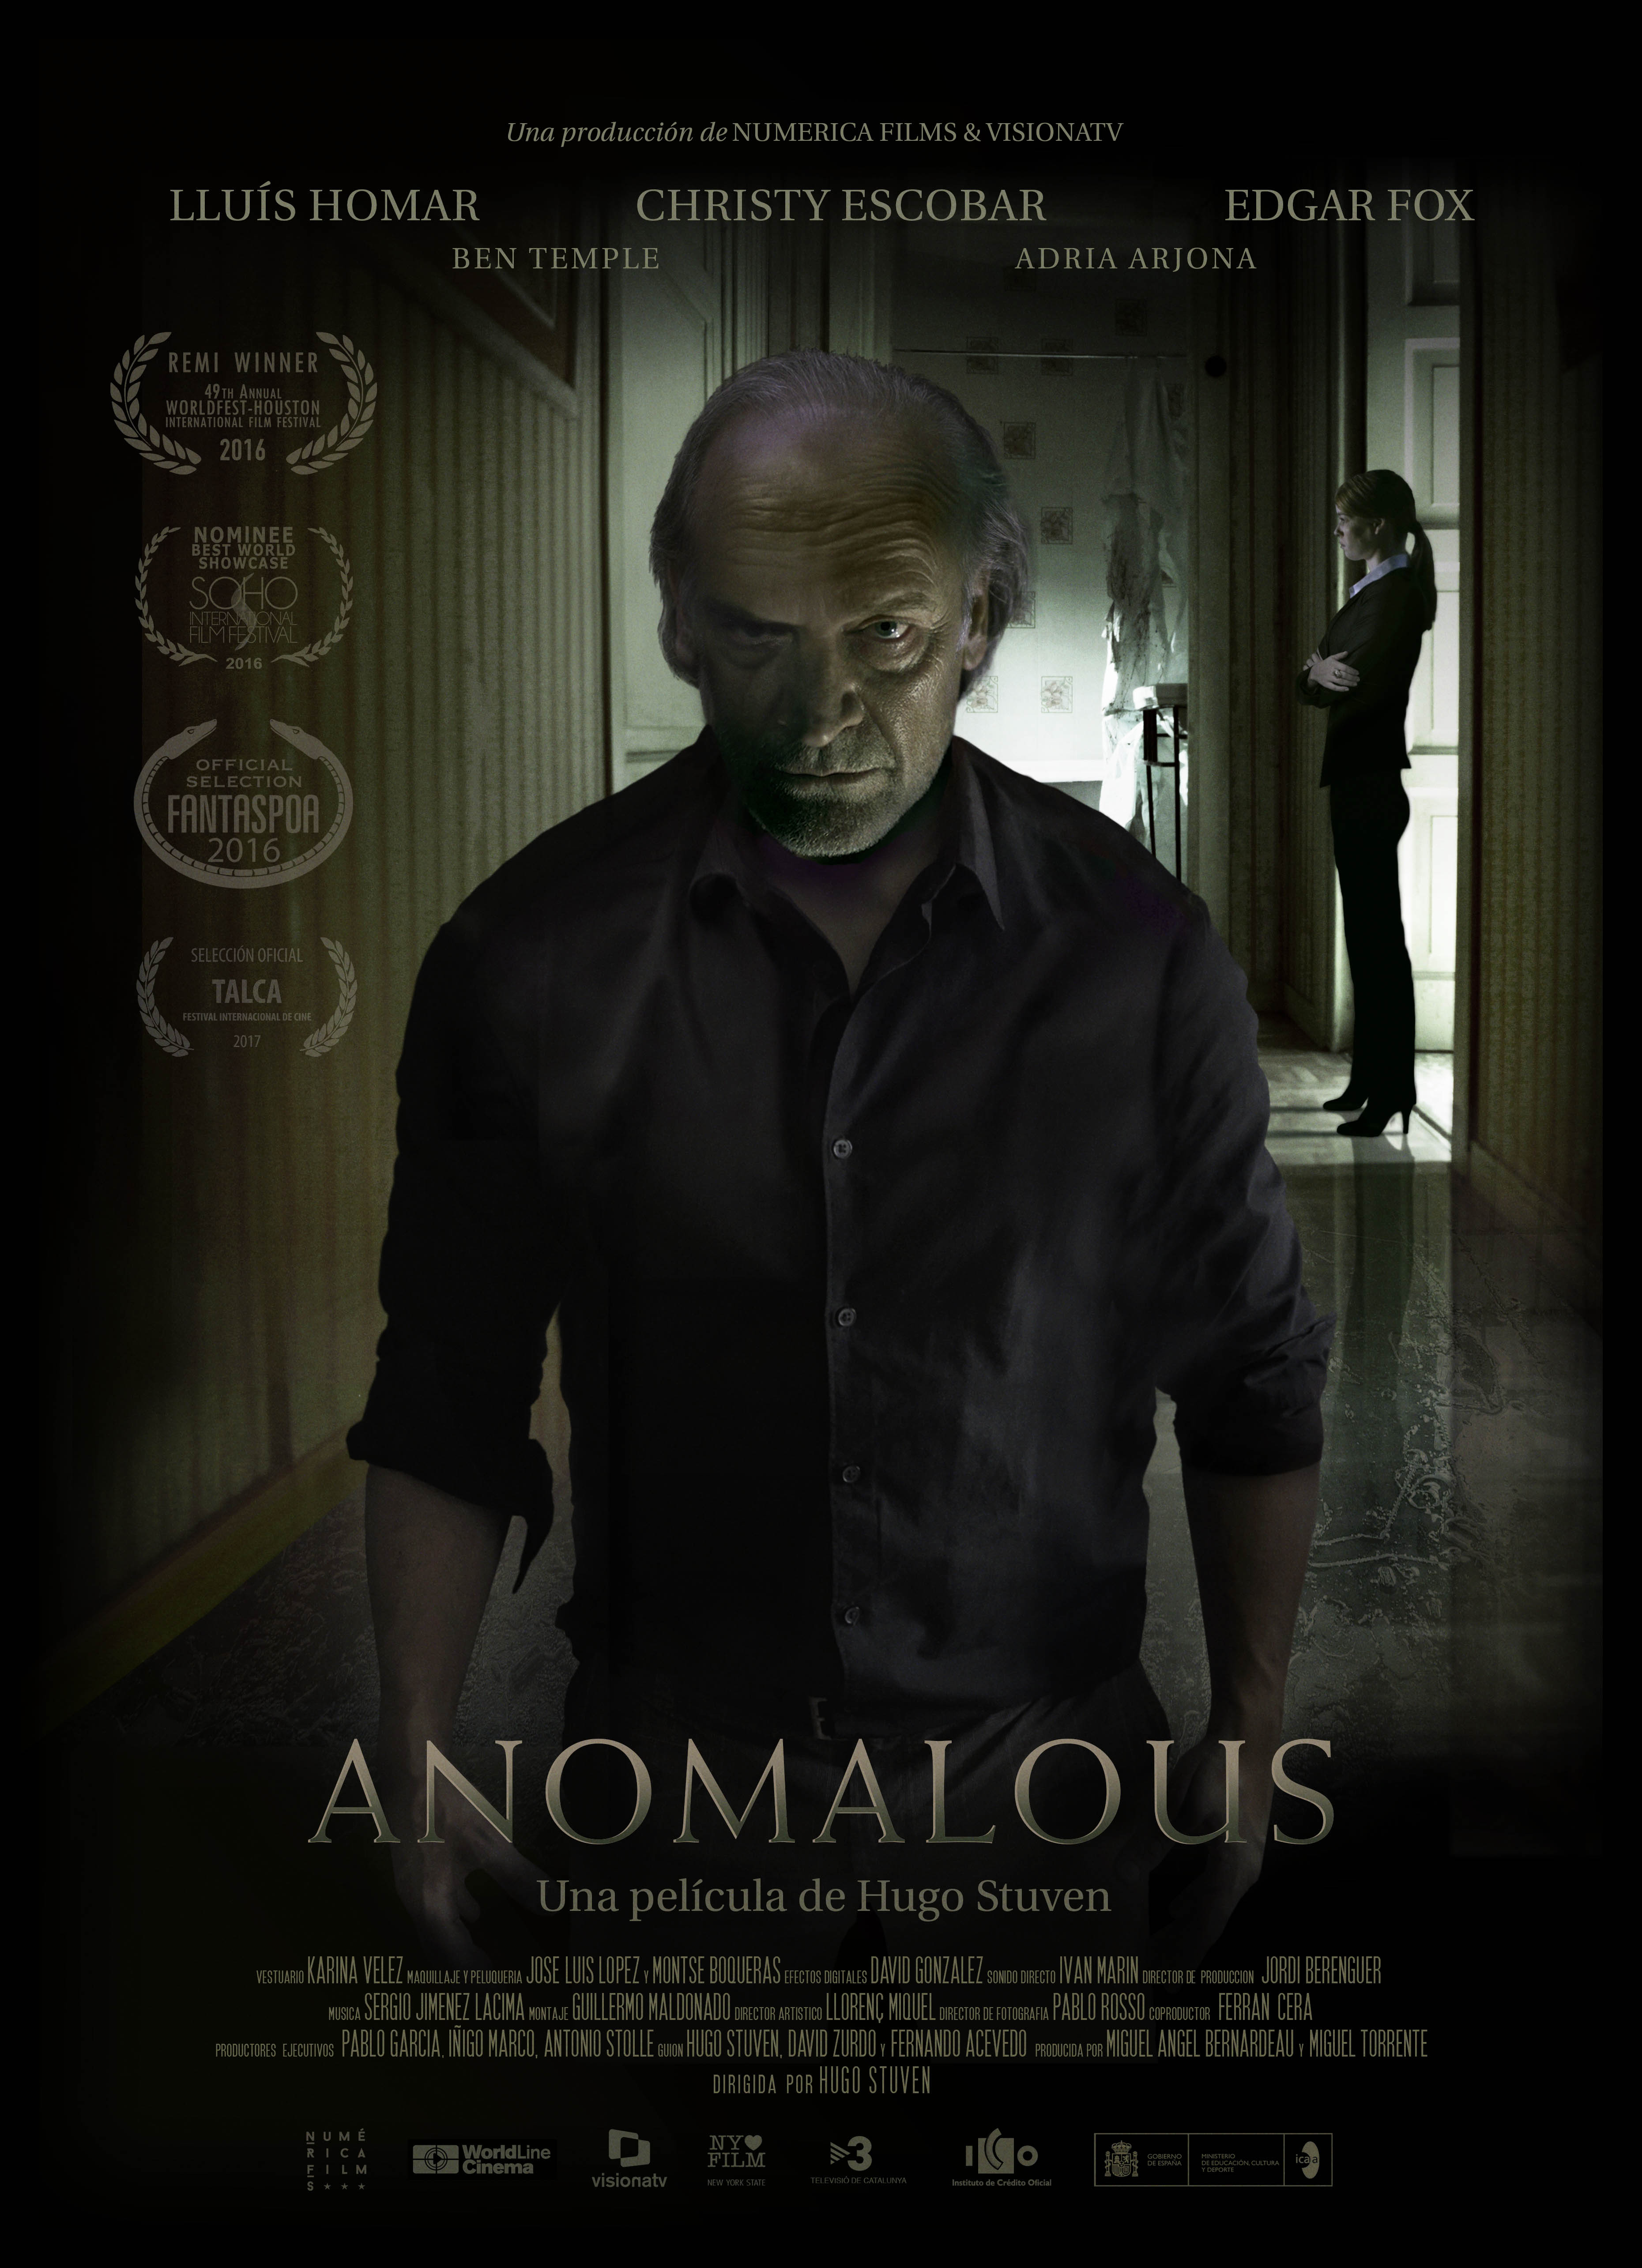 Nonton film Anomalous layarkaca21 indoxx1 ganool online streaming terbaru